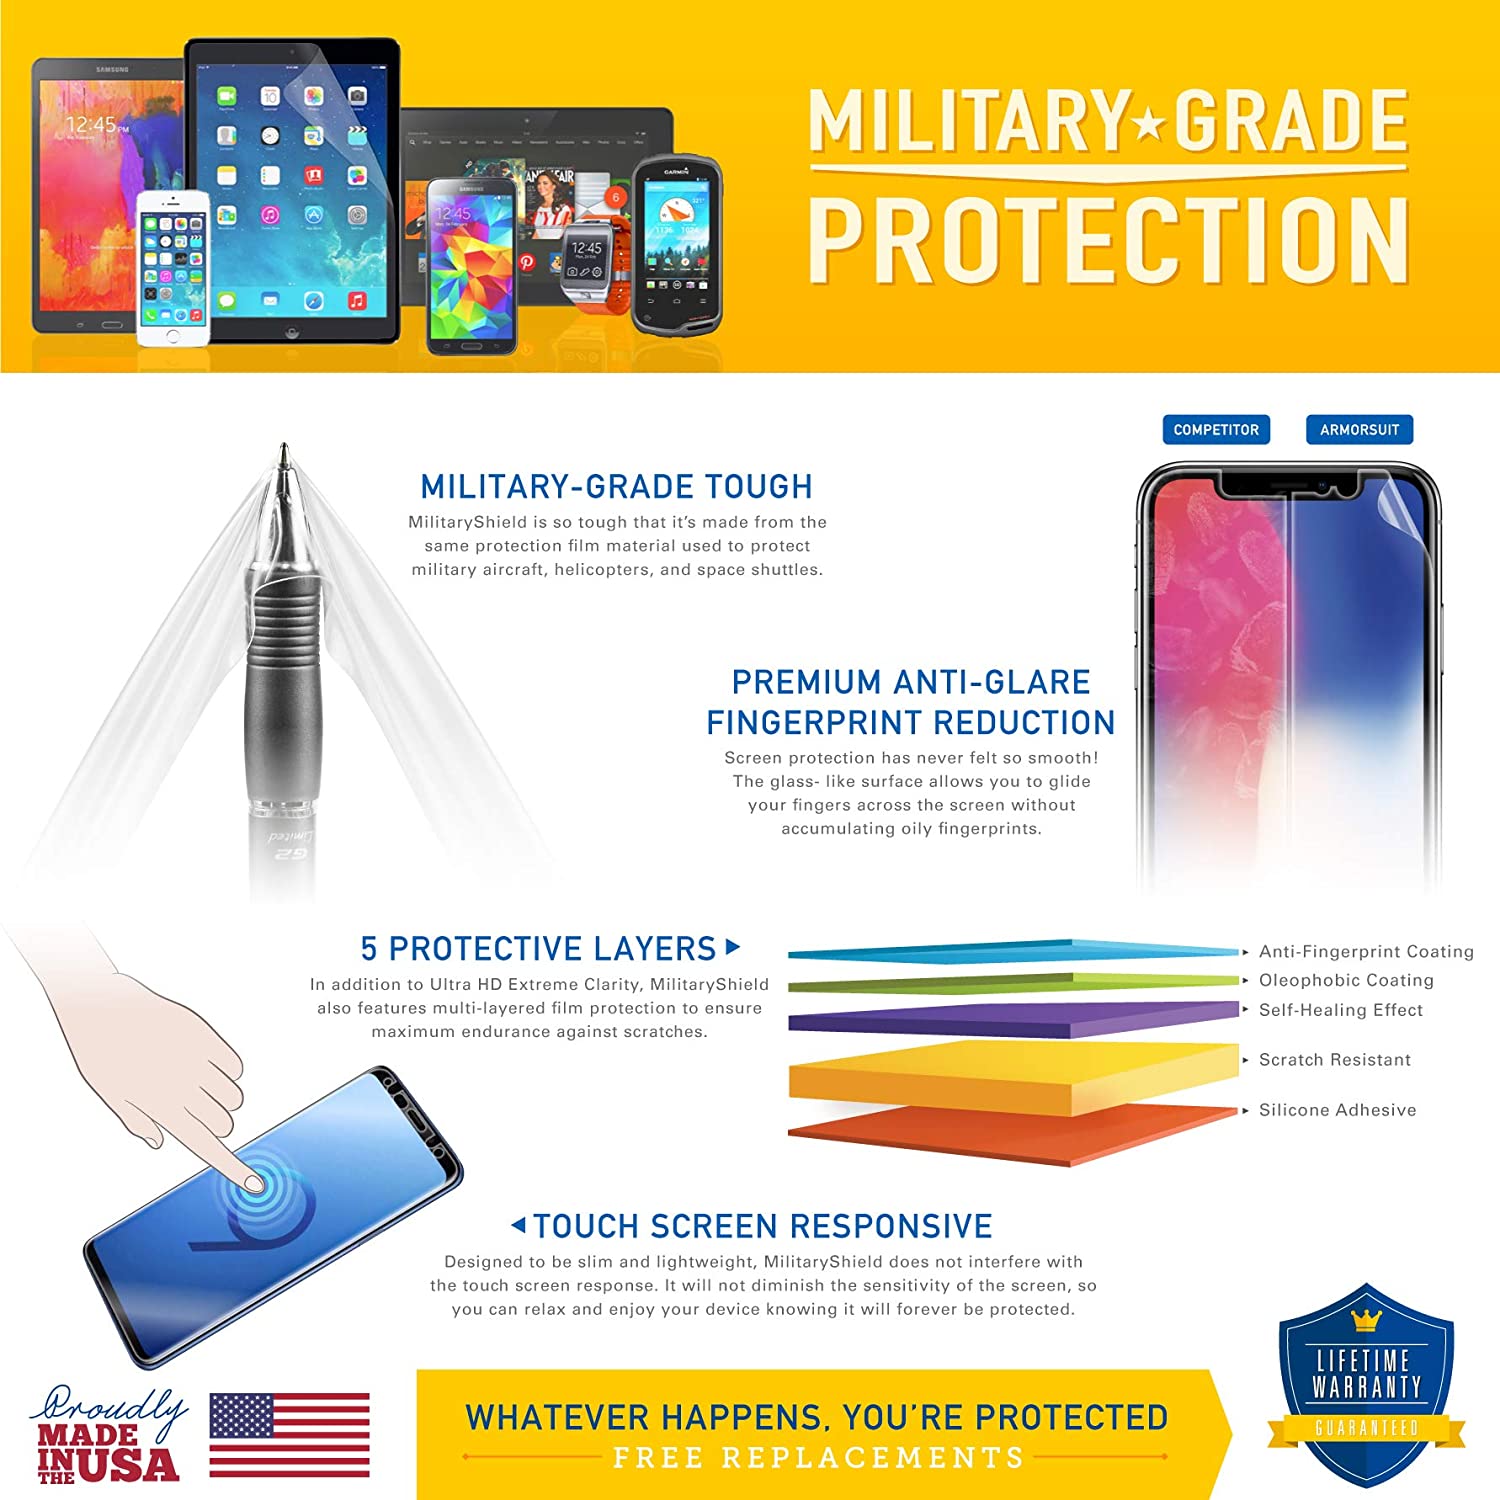 Samsung Galaxy Tab S2 8.0 Screen Protector + White Carbon Fiber Skin